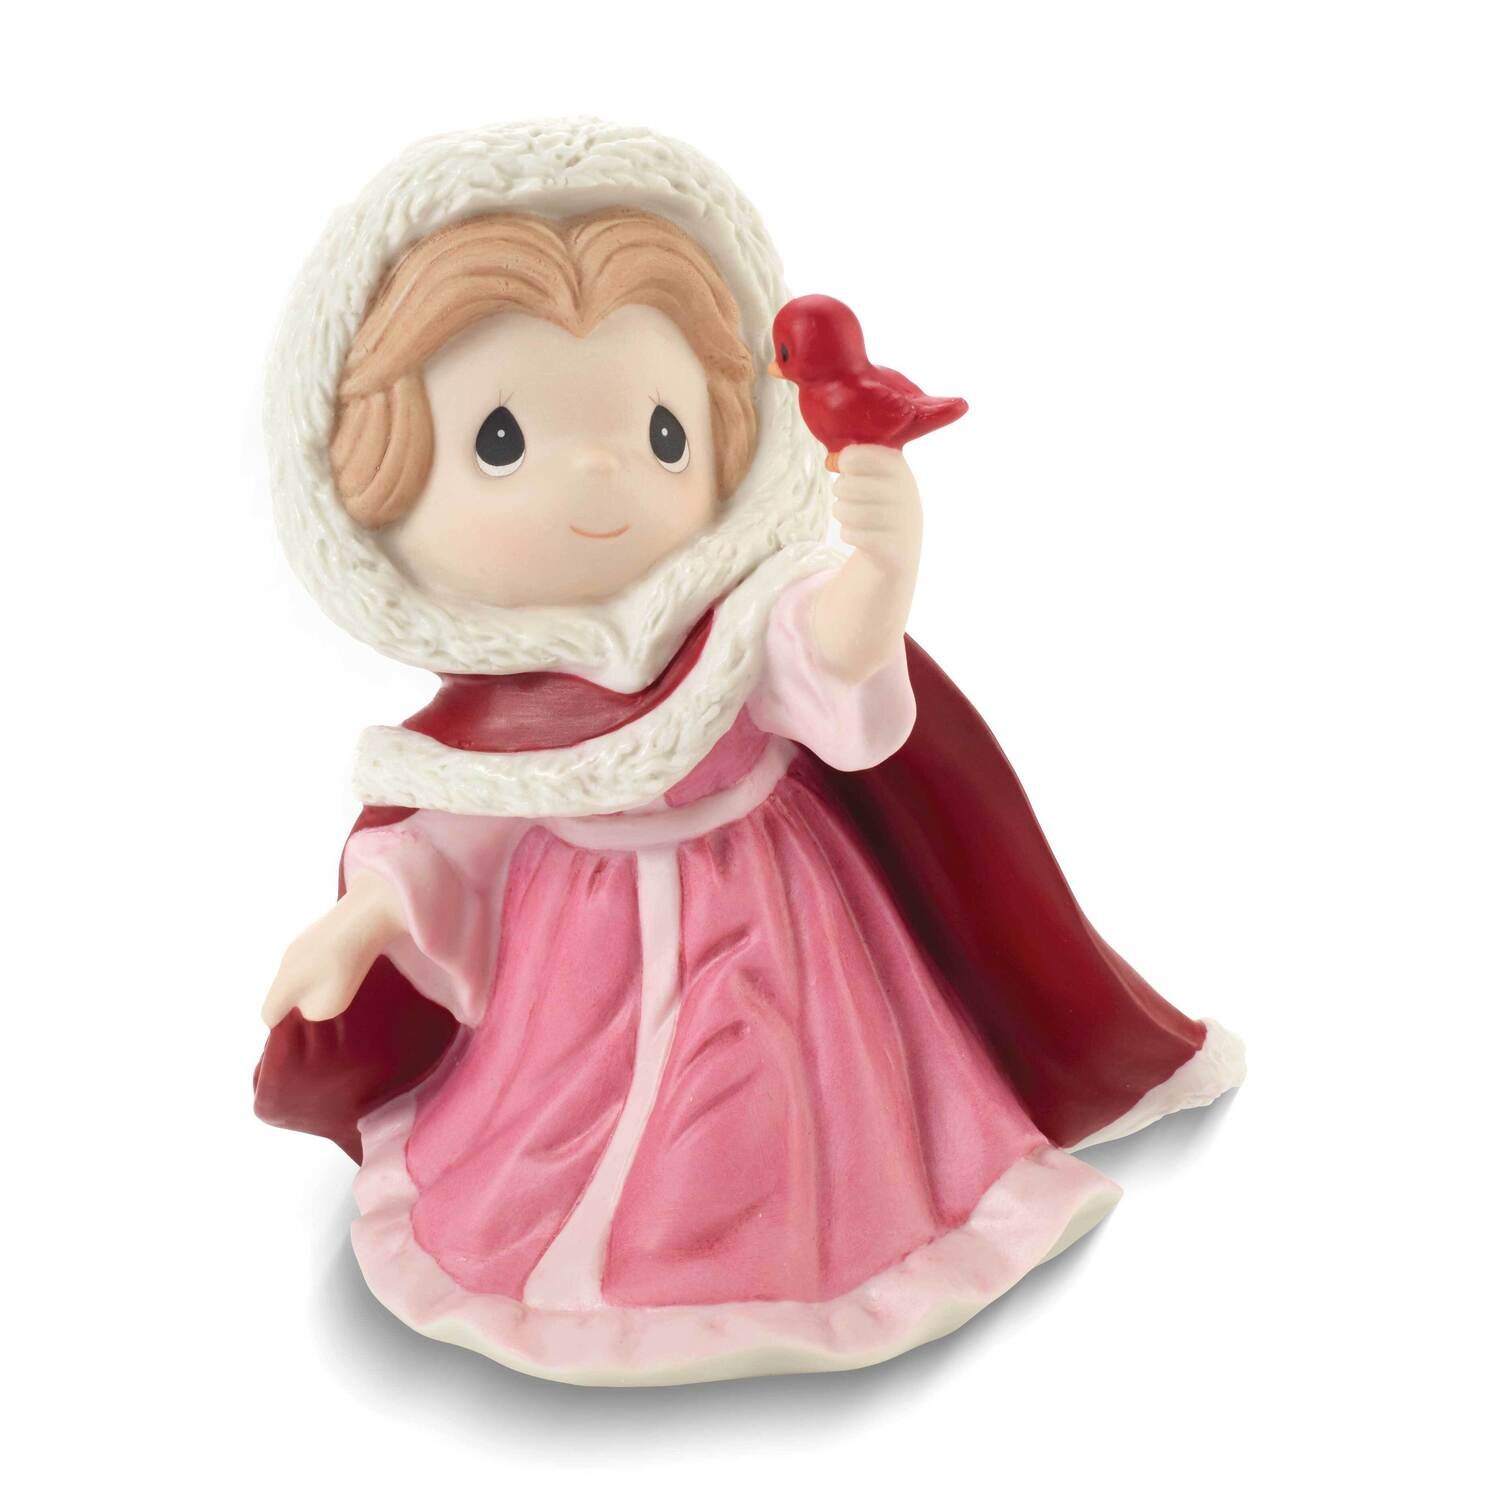 Precious Moments Disney Belle In Winter Dress Figurine GM25324